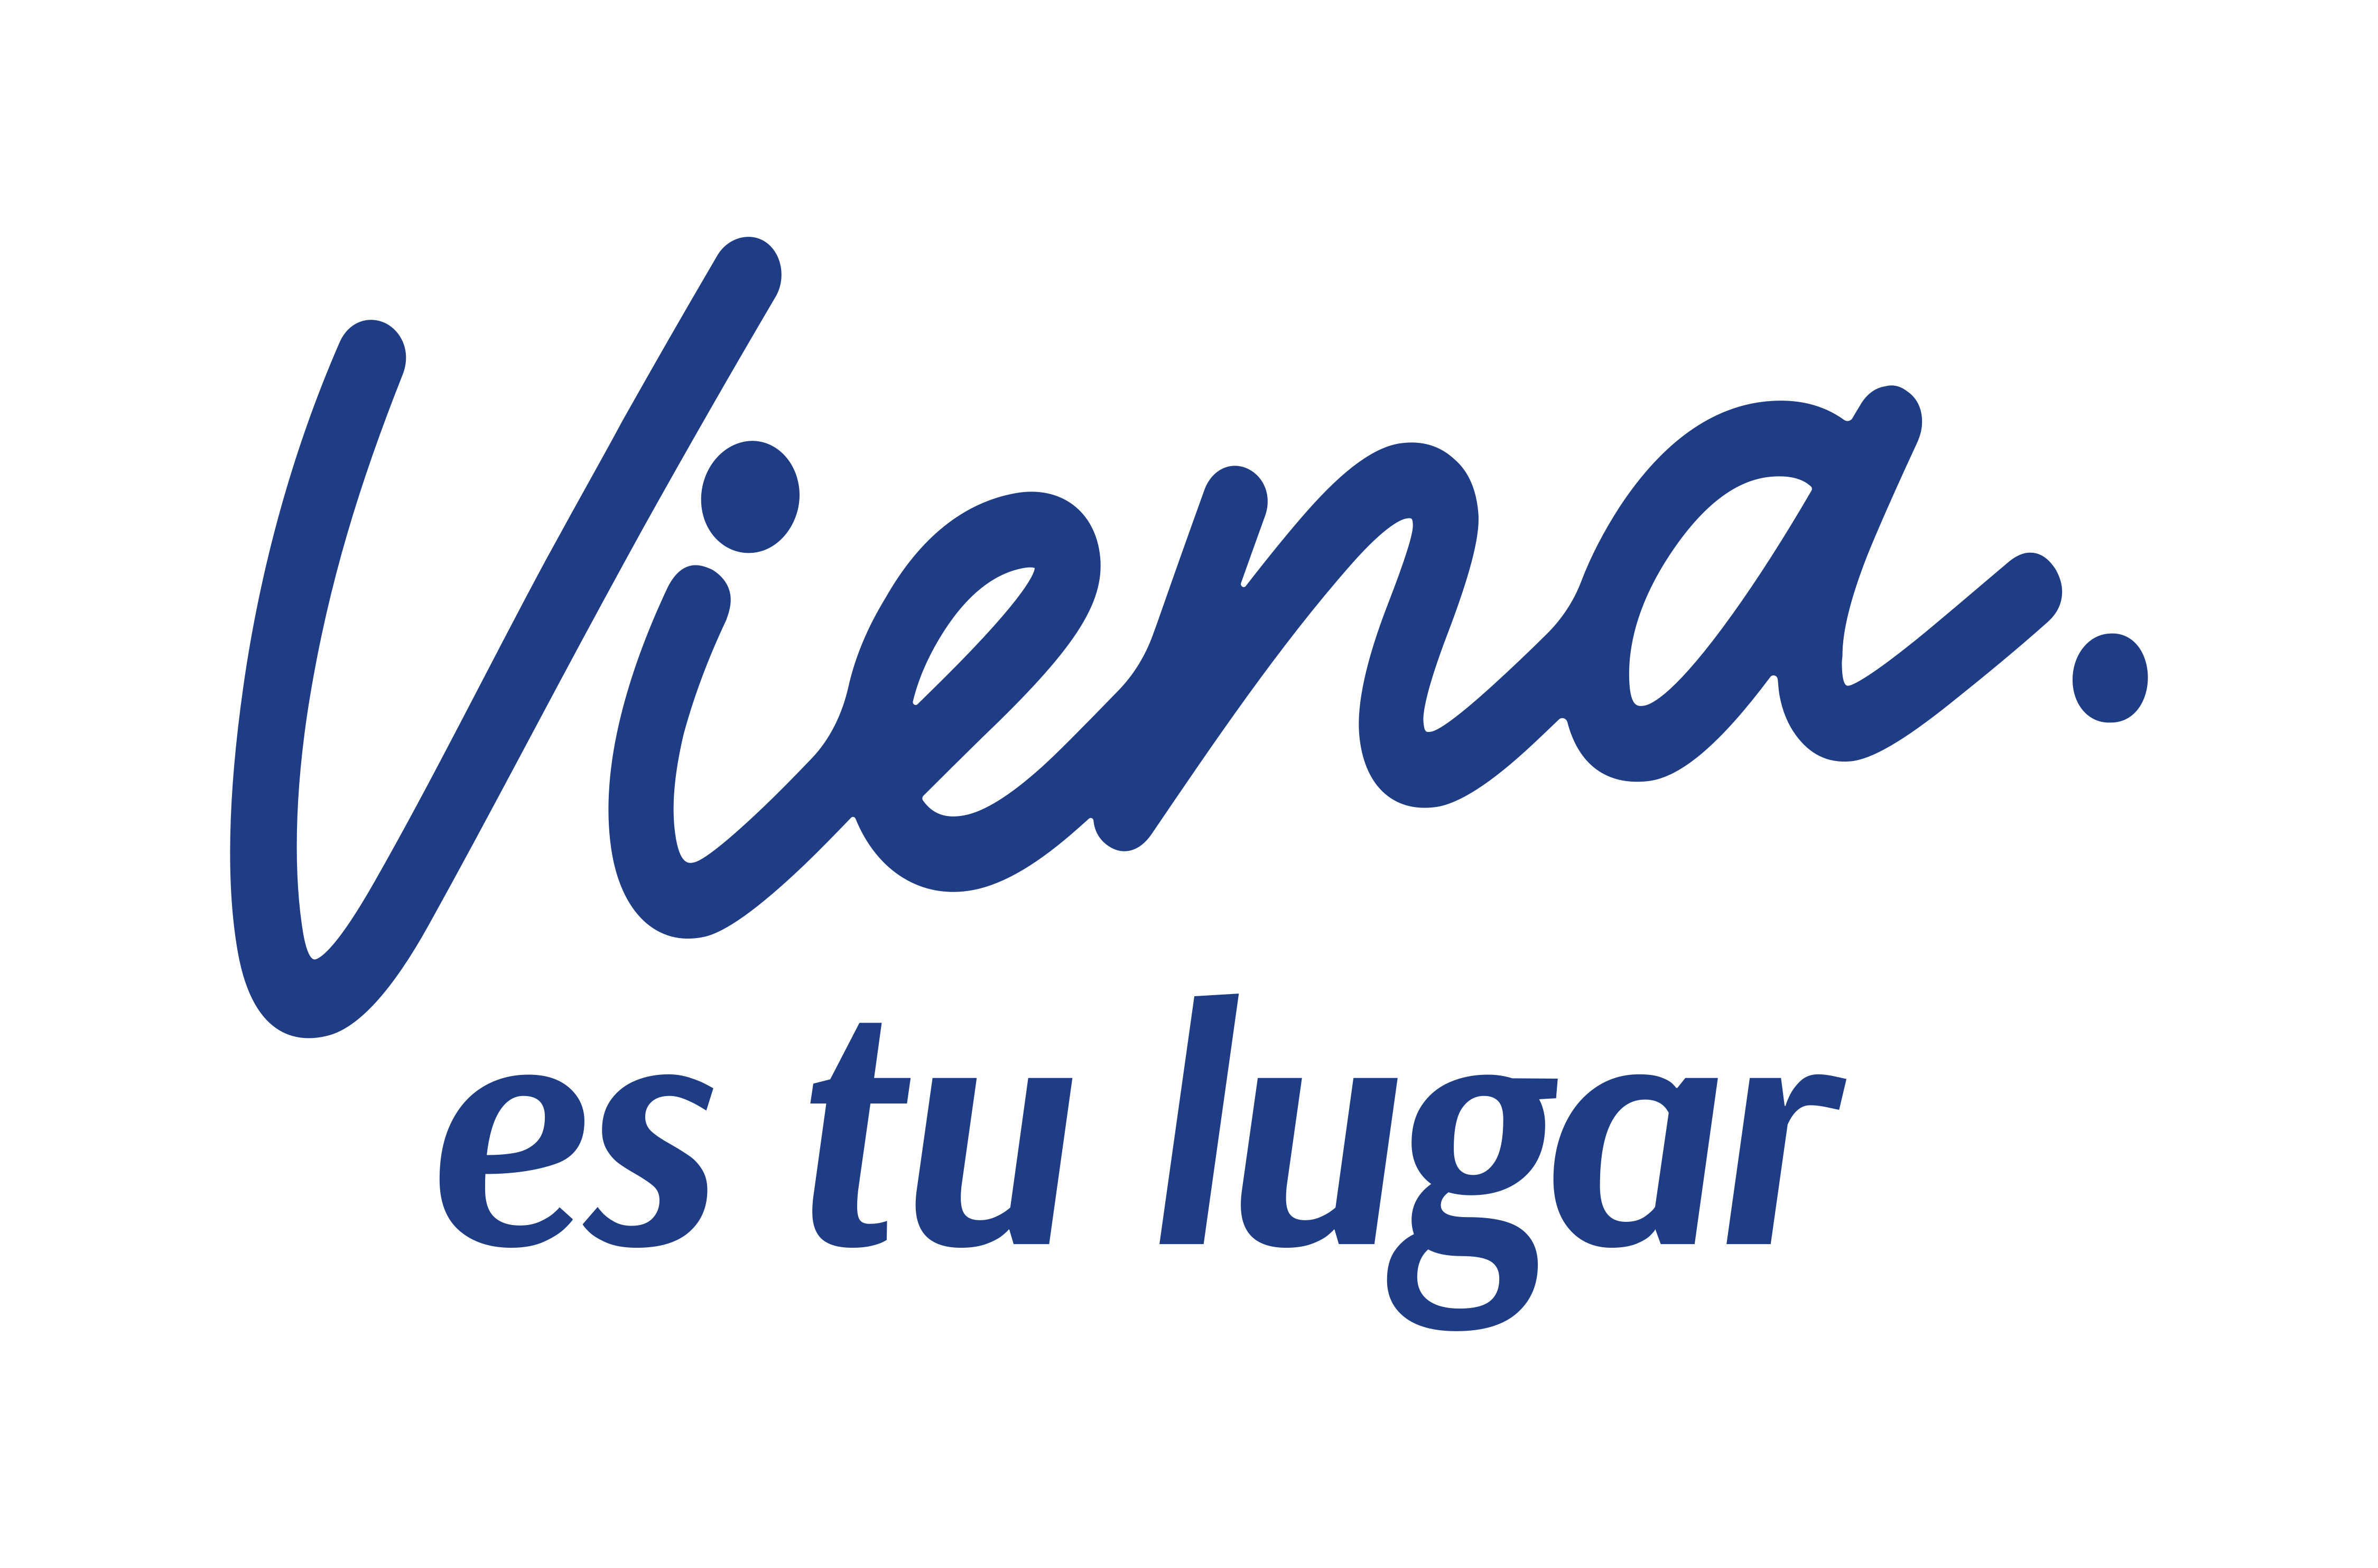 VIENA logo